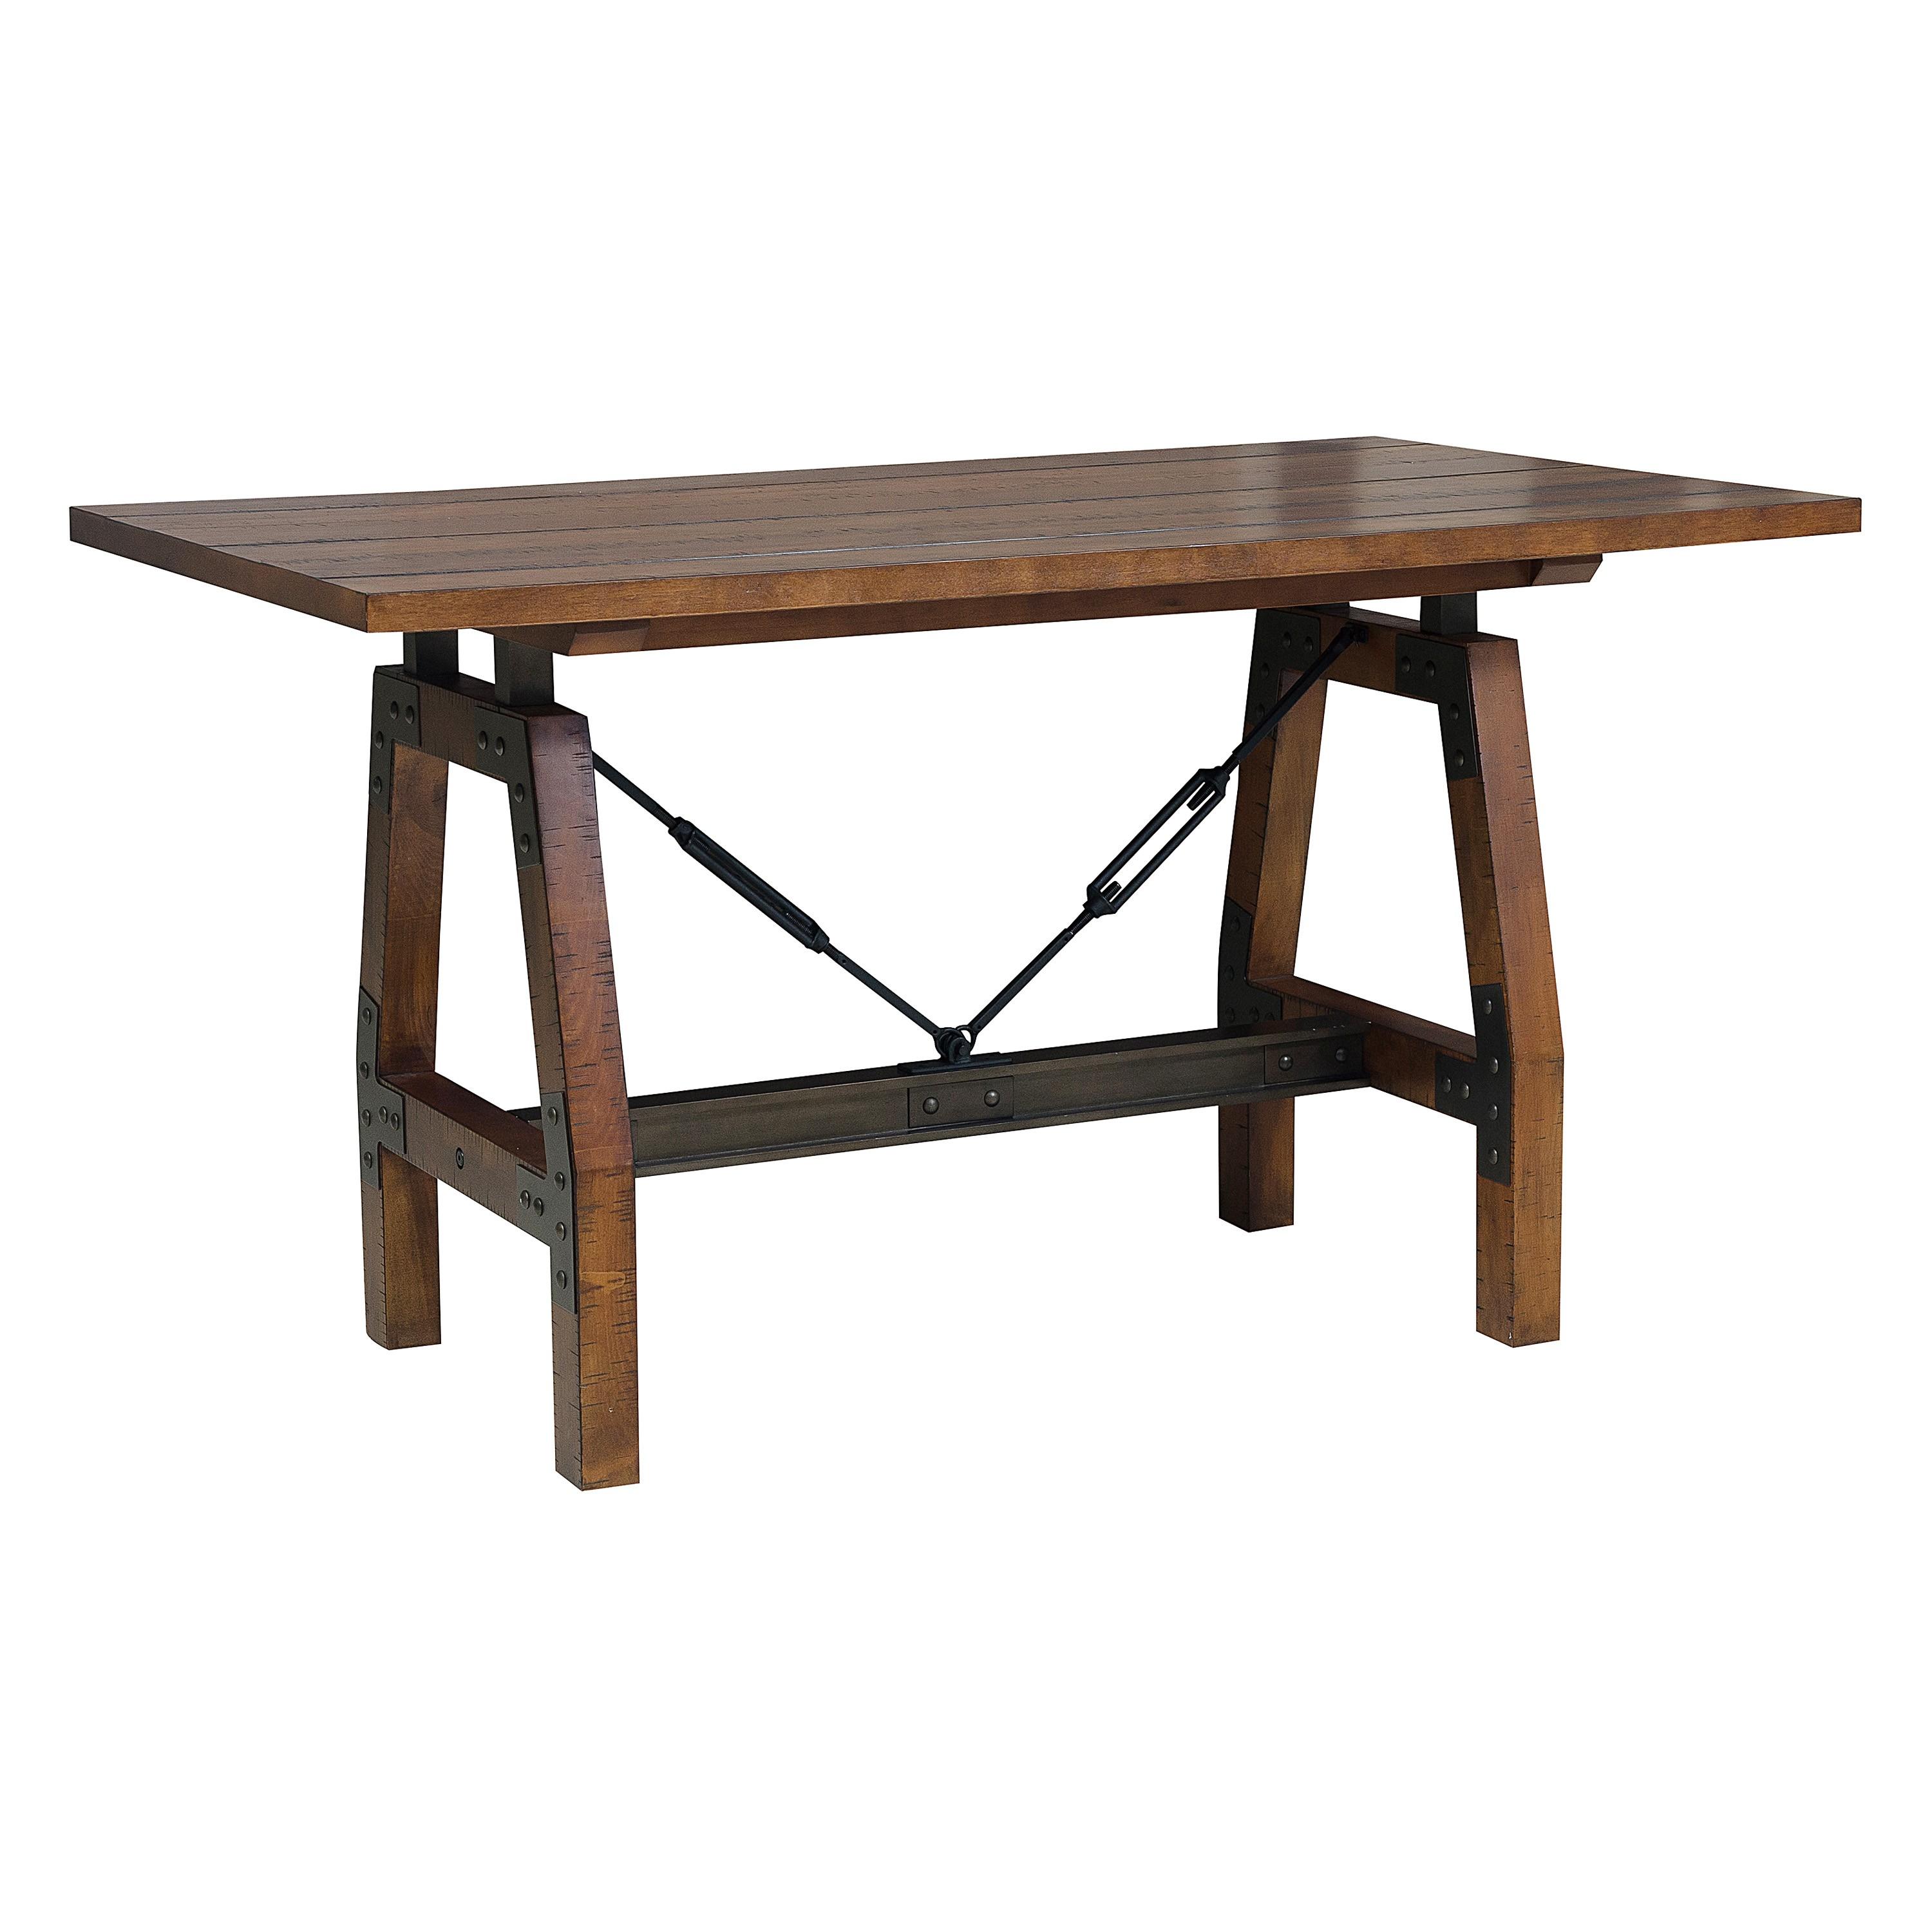 

    
Industrial Rustic Brown Wood Dining Room Set 5pcs Homelegance 1715-36 Holverson
